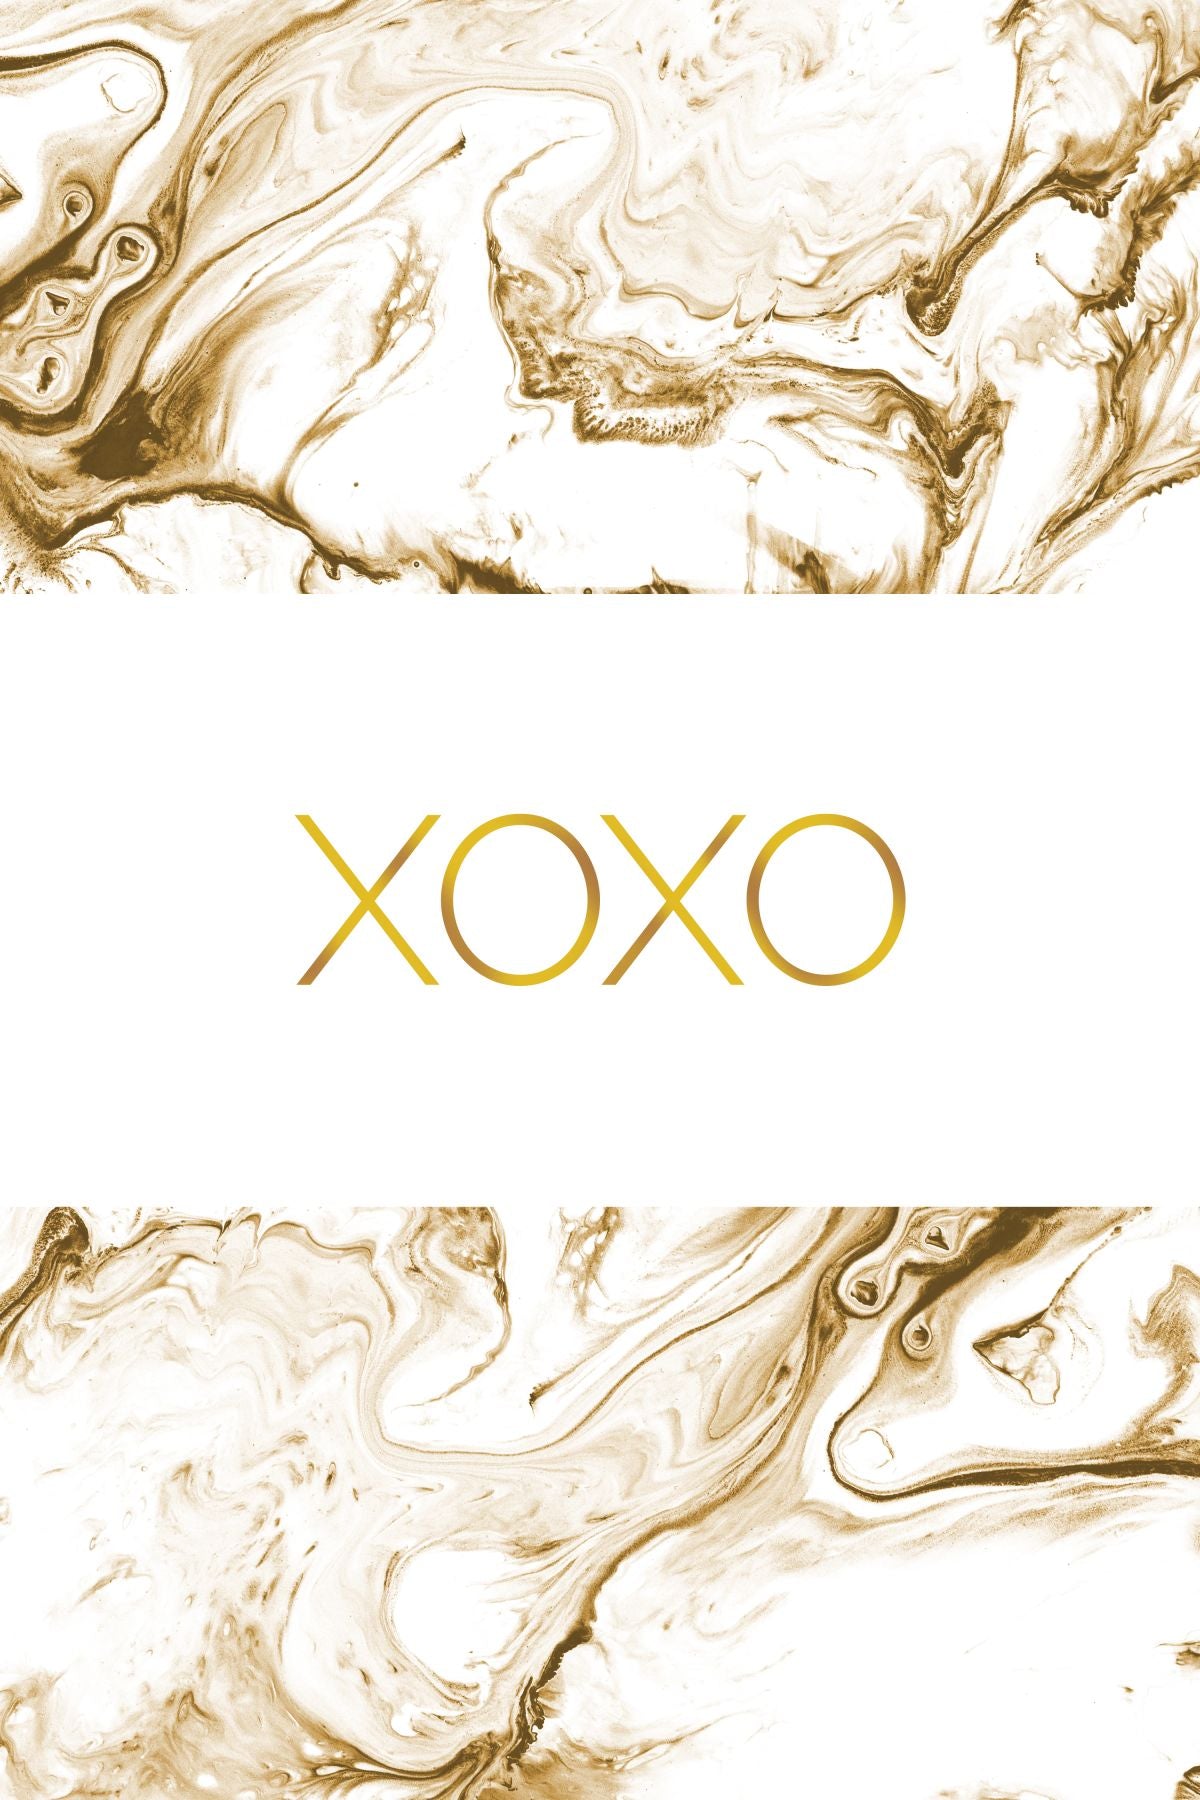 XOXO Typography